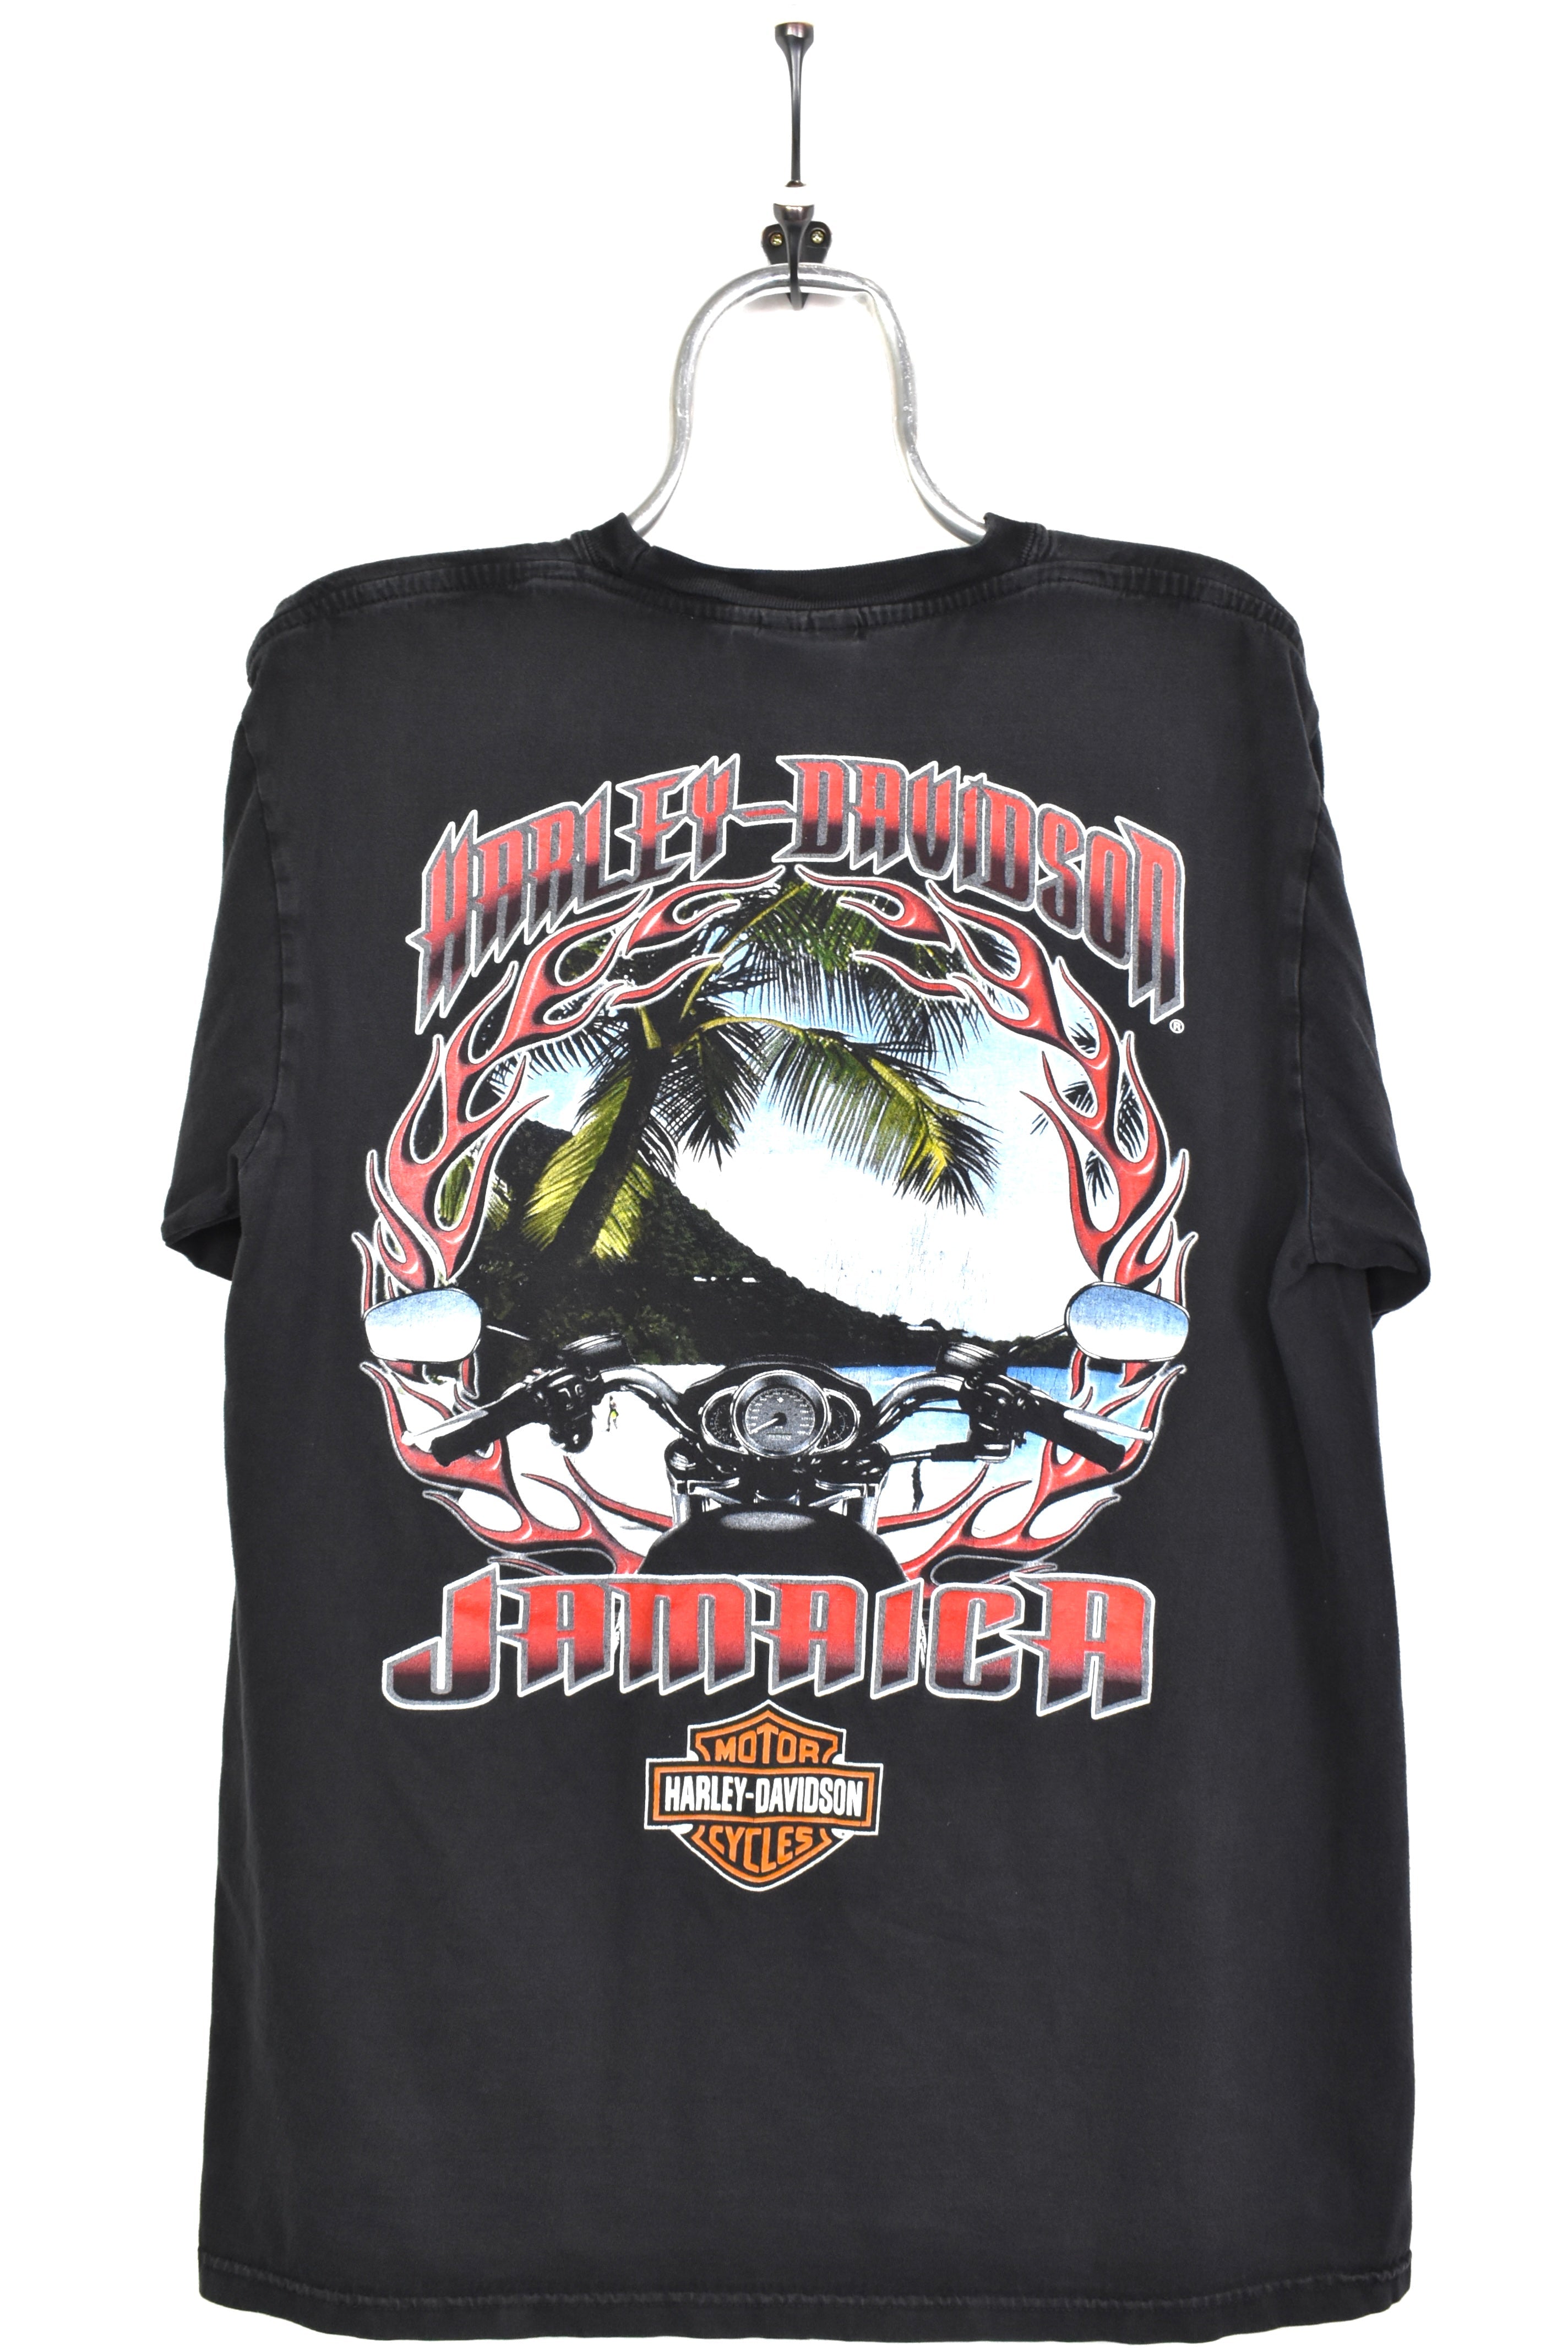 Vintage Harley Davidson shirt, black Jamaica graphic tee - AU XL HARLEY DAVIDSON